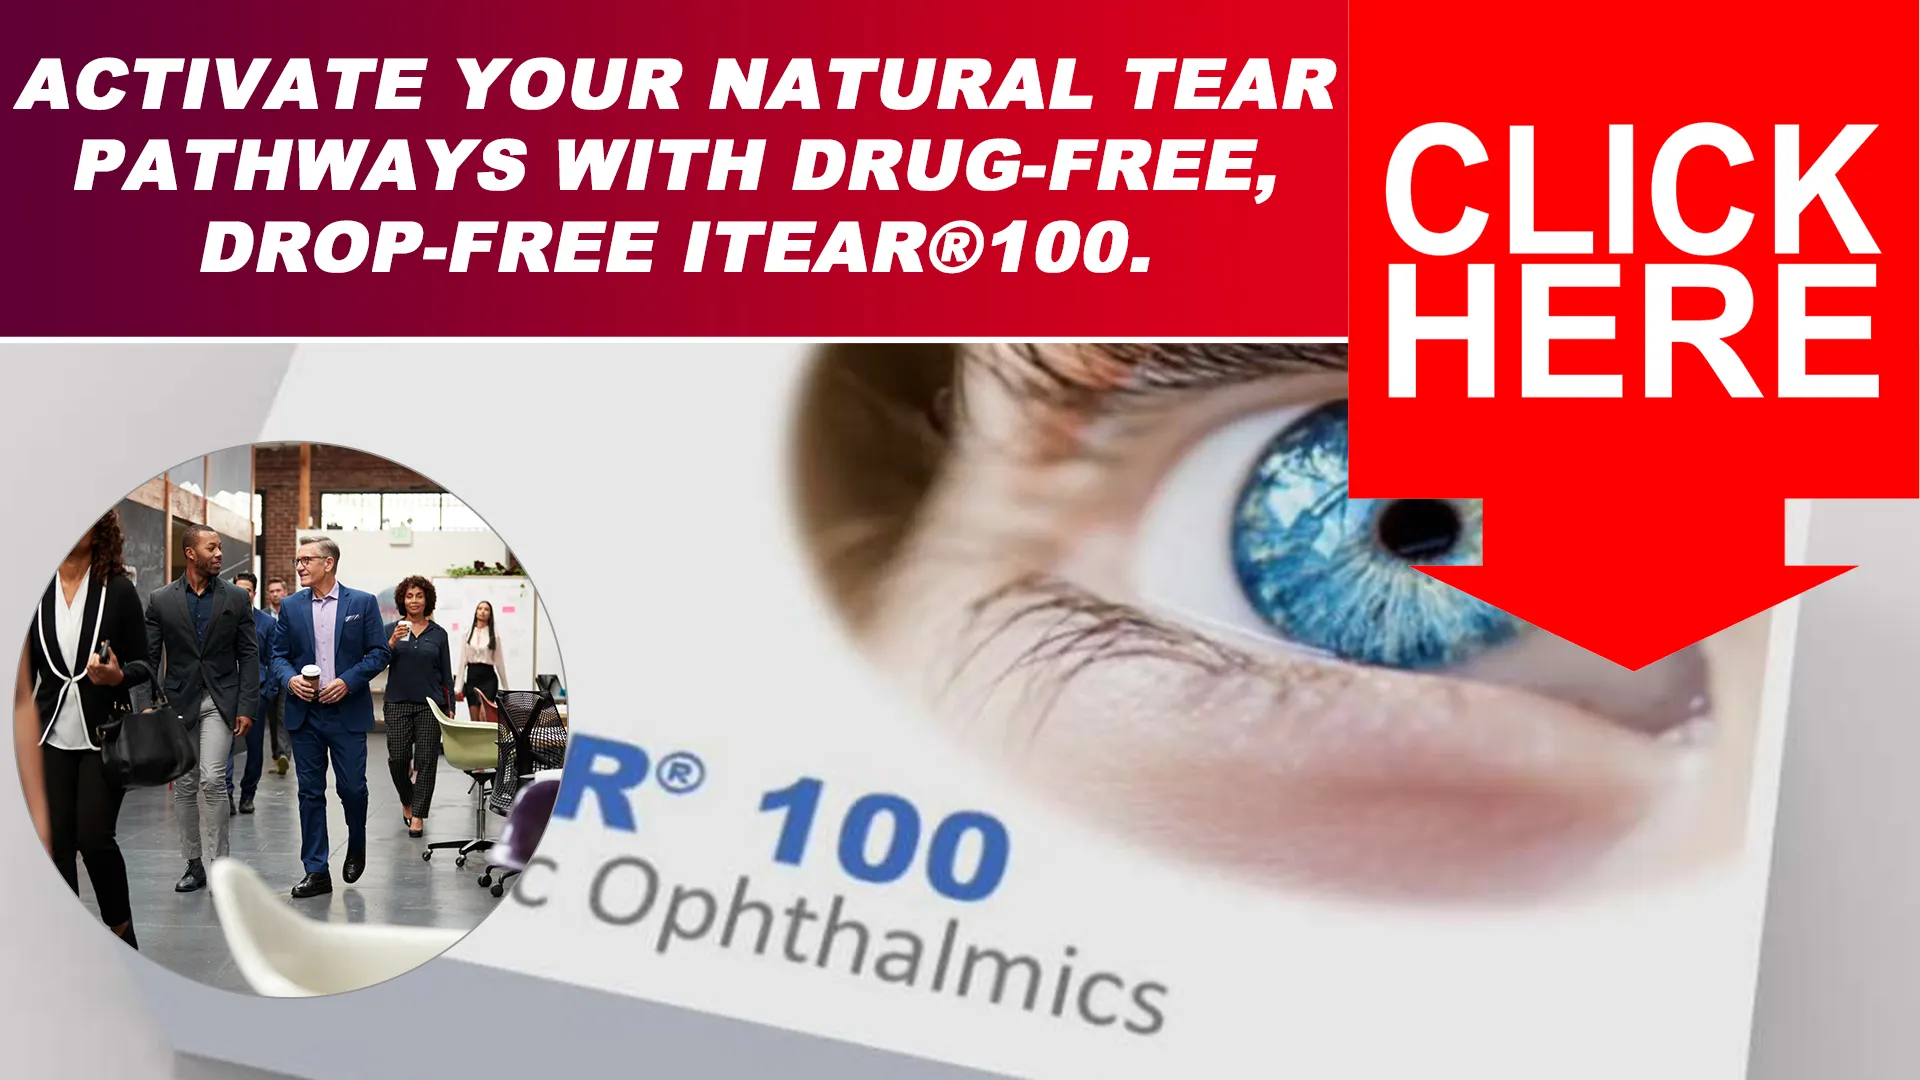 Mitigating Dry Eye Symptoms with iTEAR100